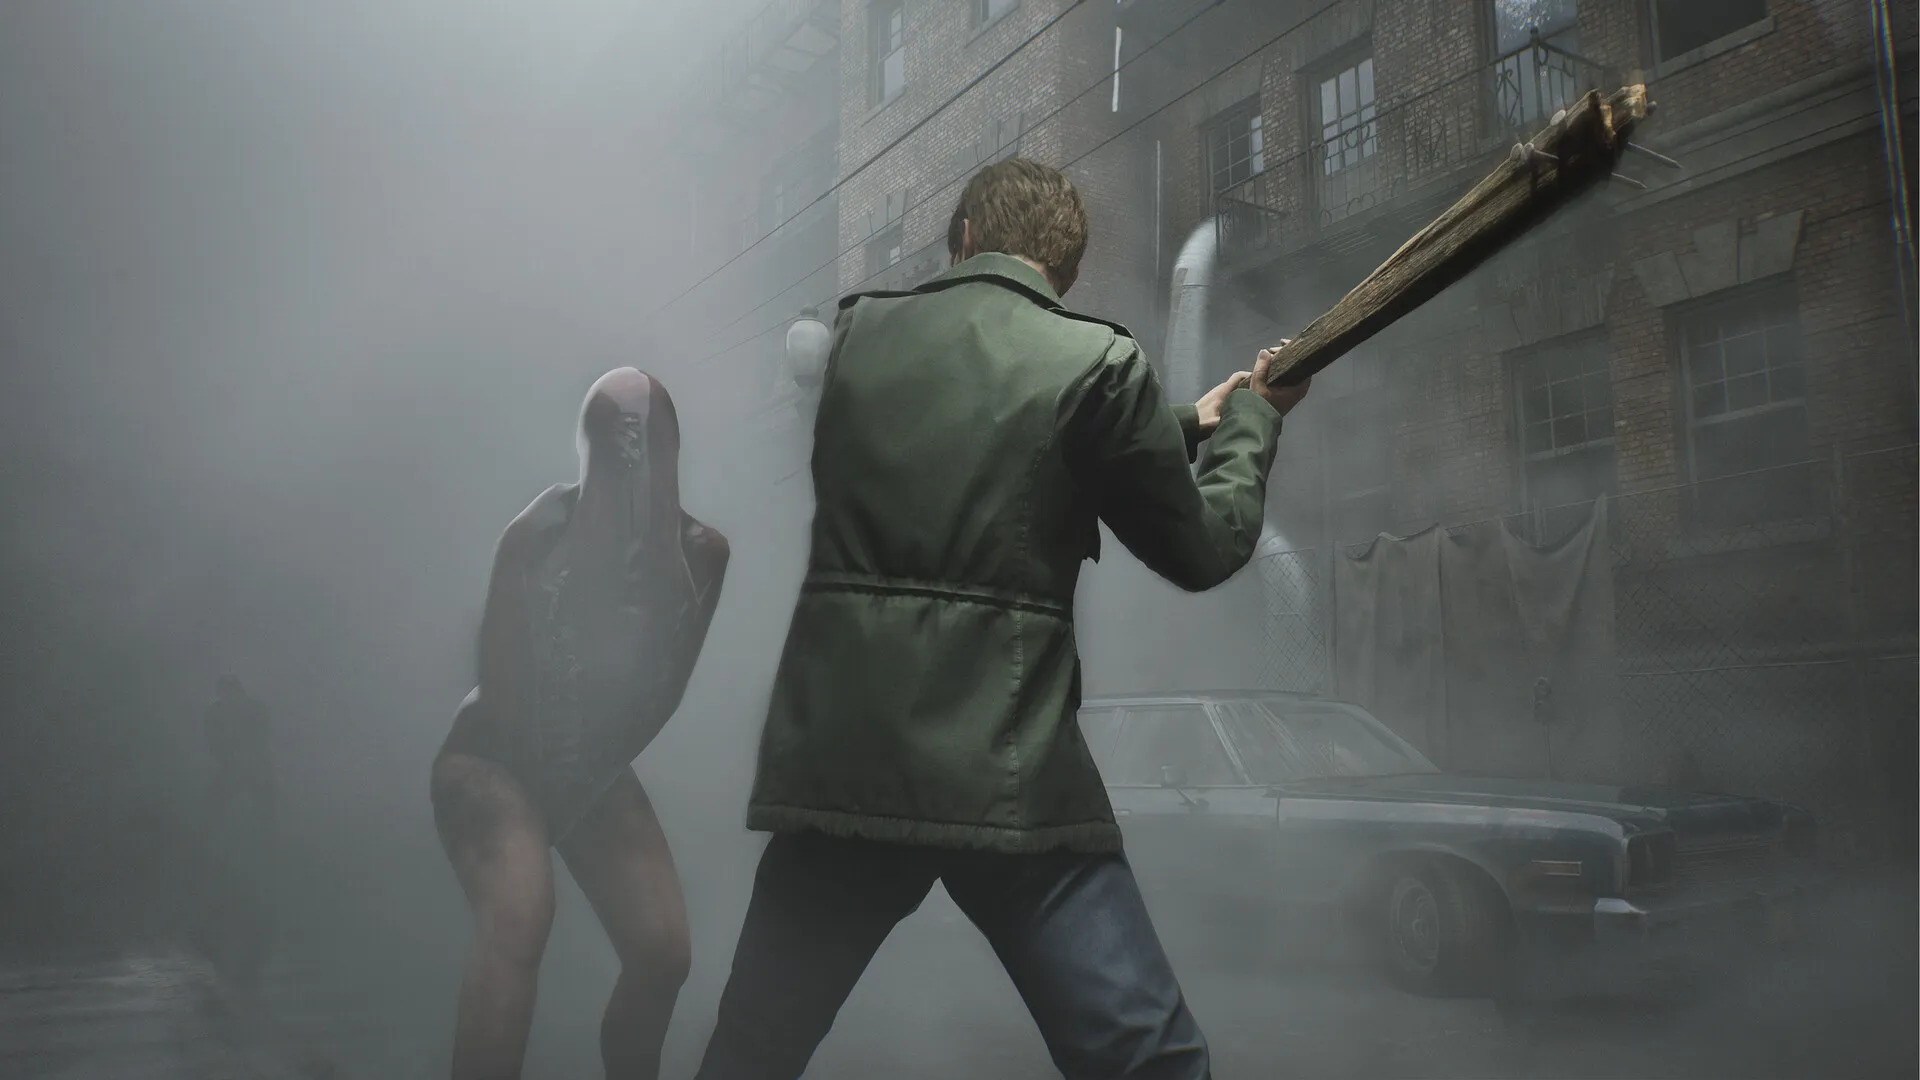 Data de lançamento de Silent Hill 2 Remake foi atualizada - EvilHazard